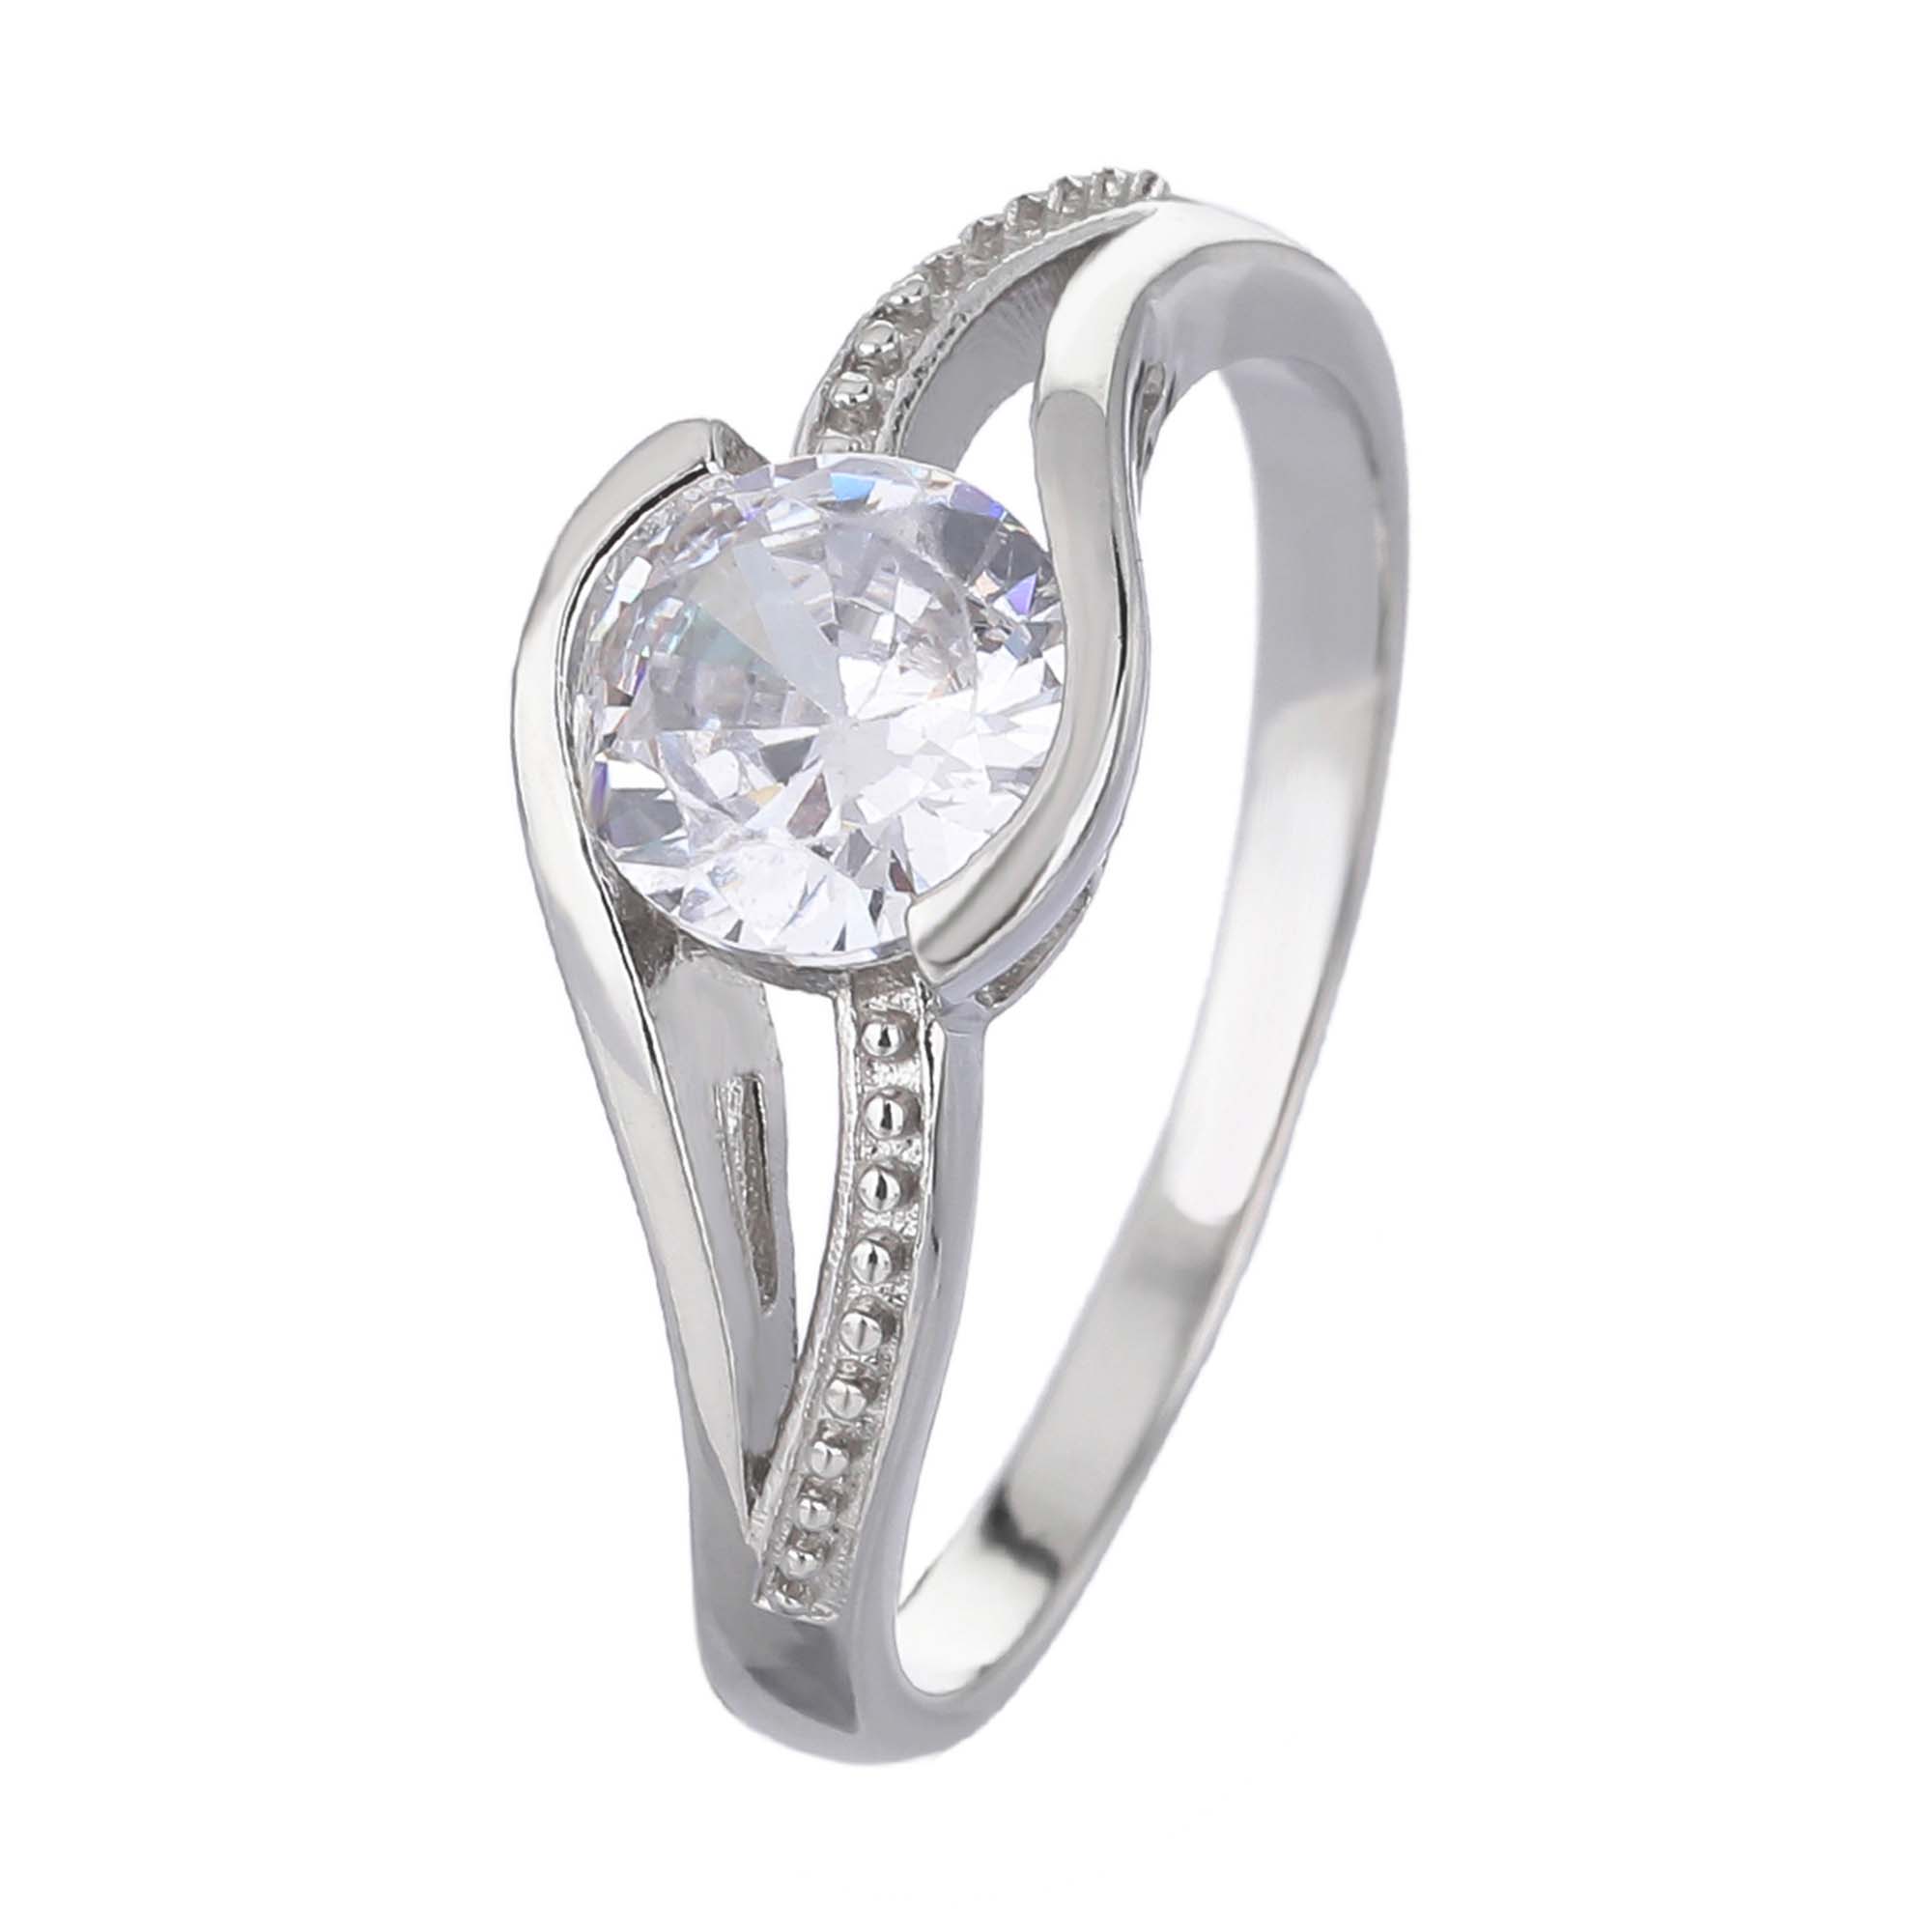 Stříbrný prsten SOLITÉR bílý VLNKY Velikost prstenu: 58 Ag 925/1000